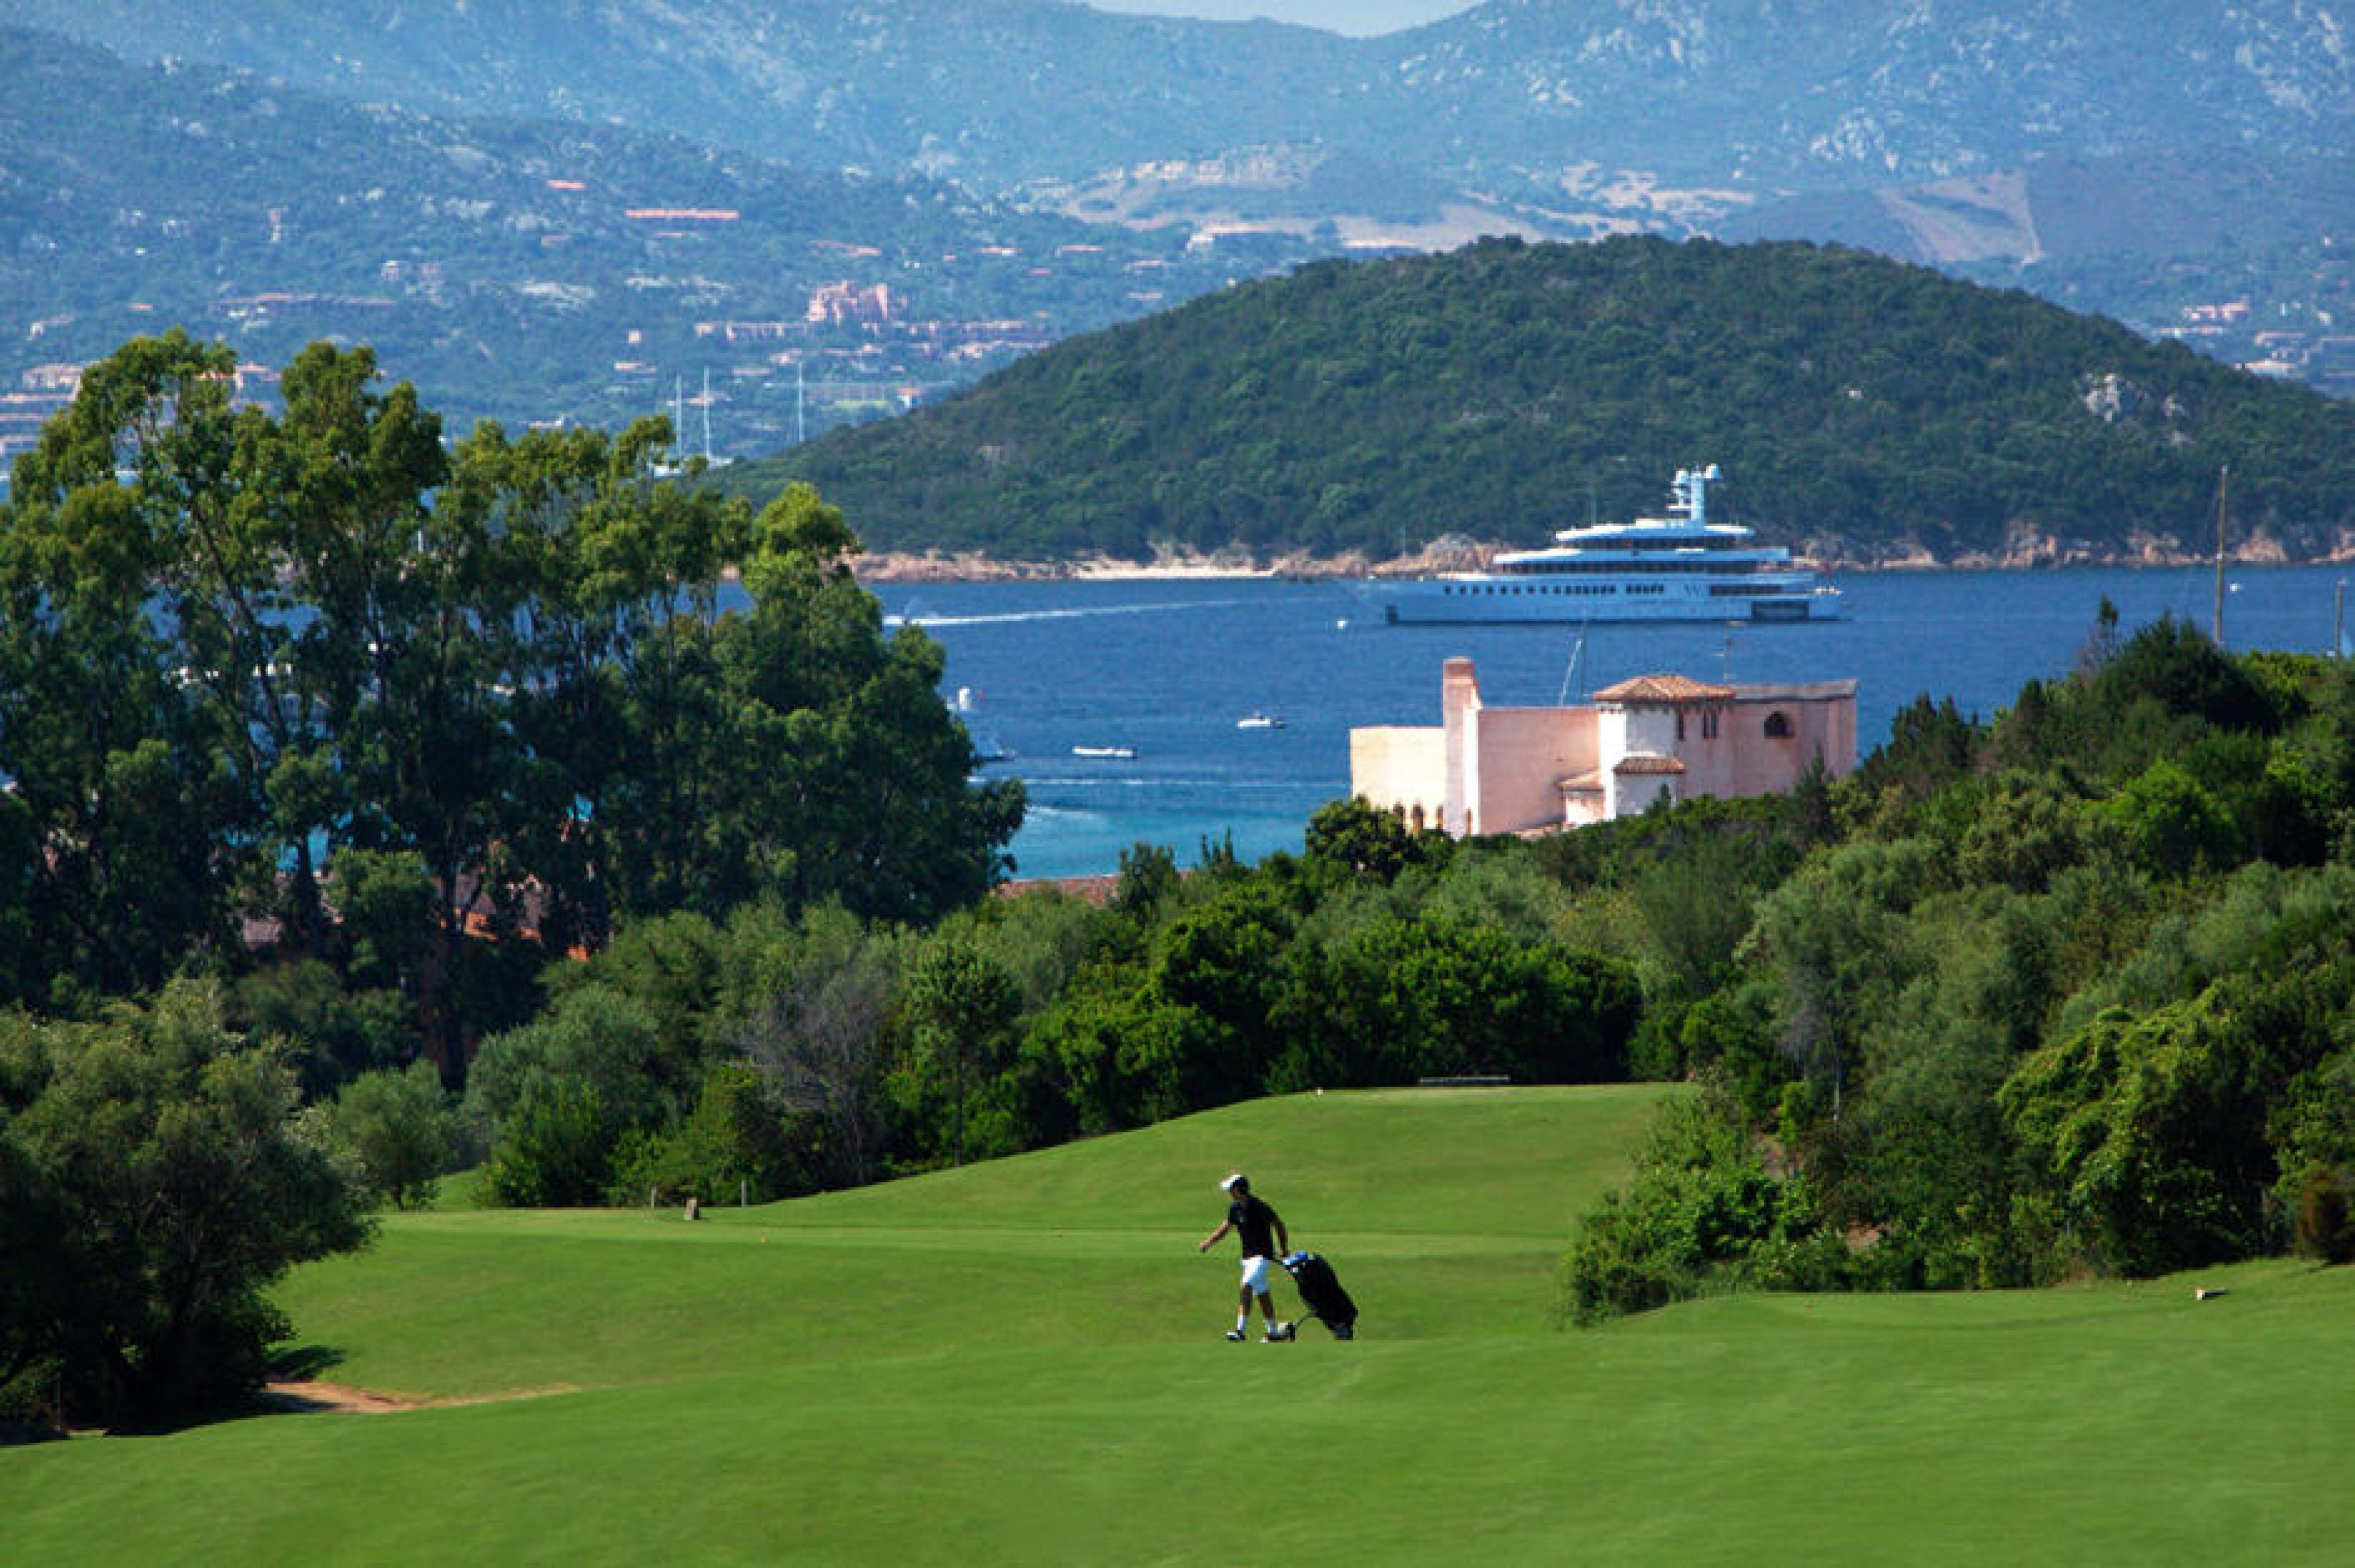 Sea View at evero Golf Club Costa Smeralda , Sardinia, Italy